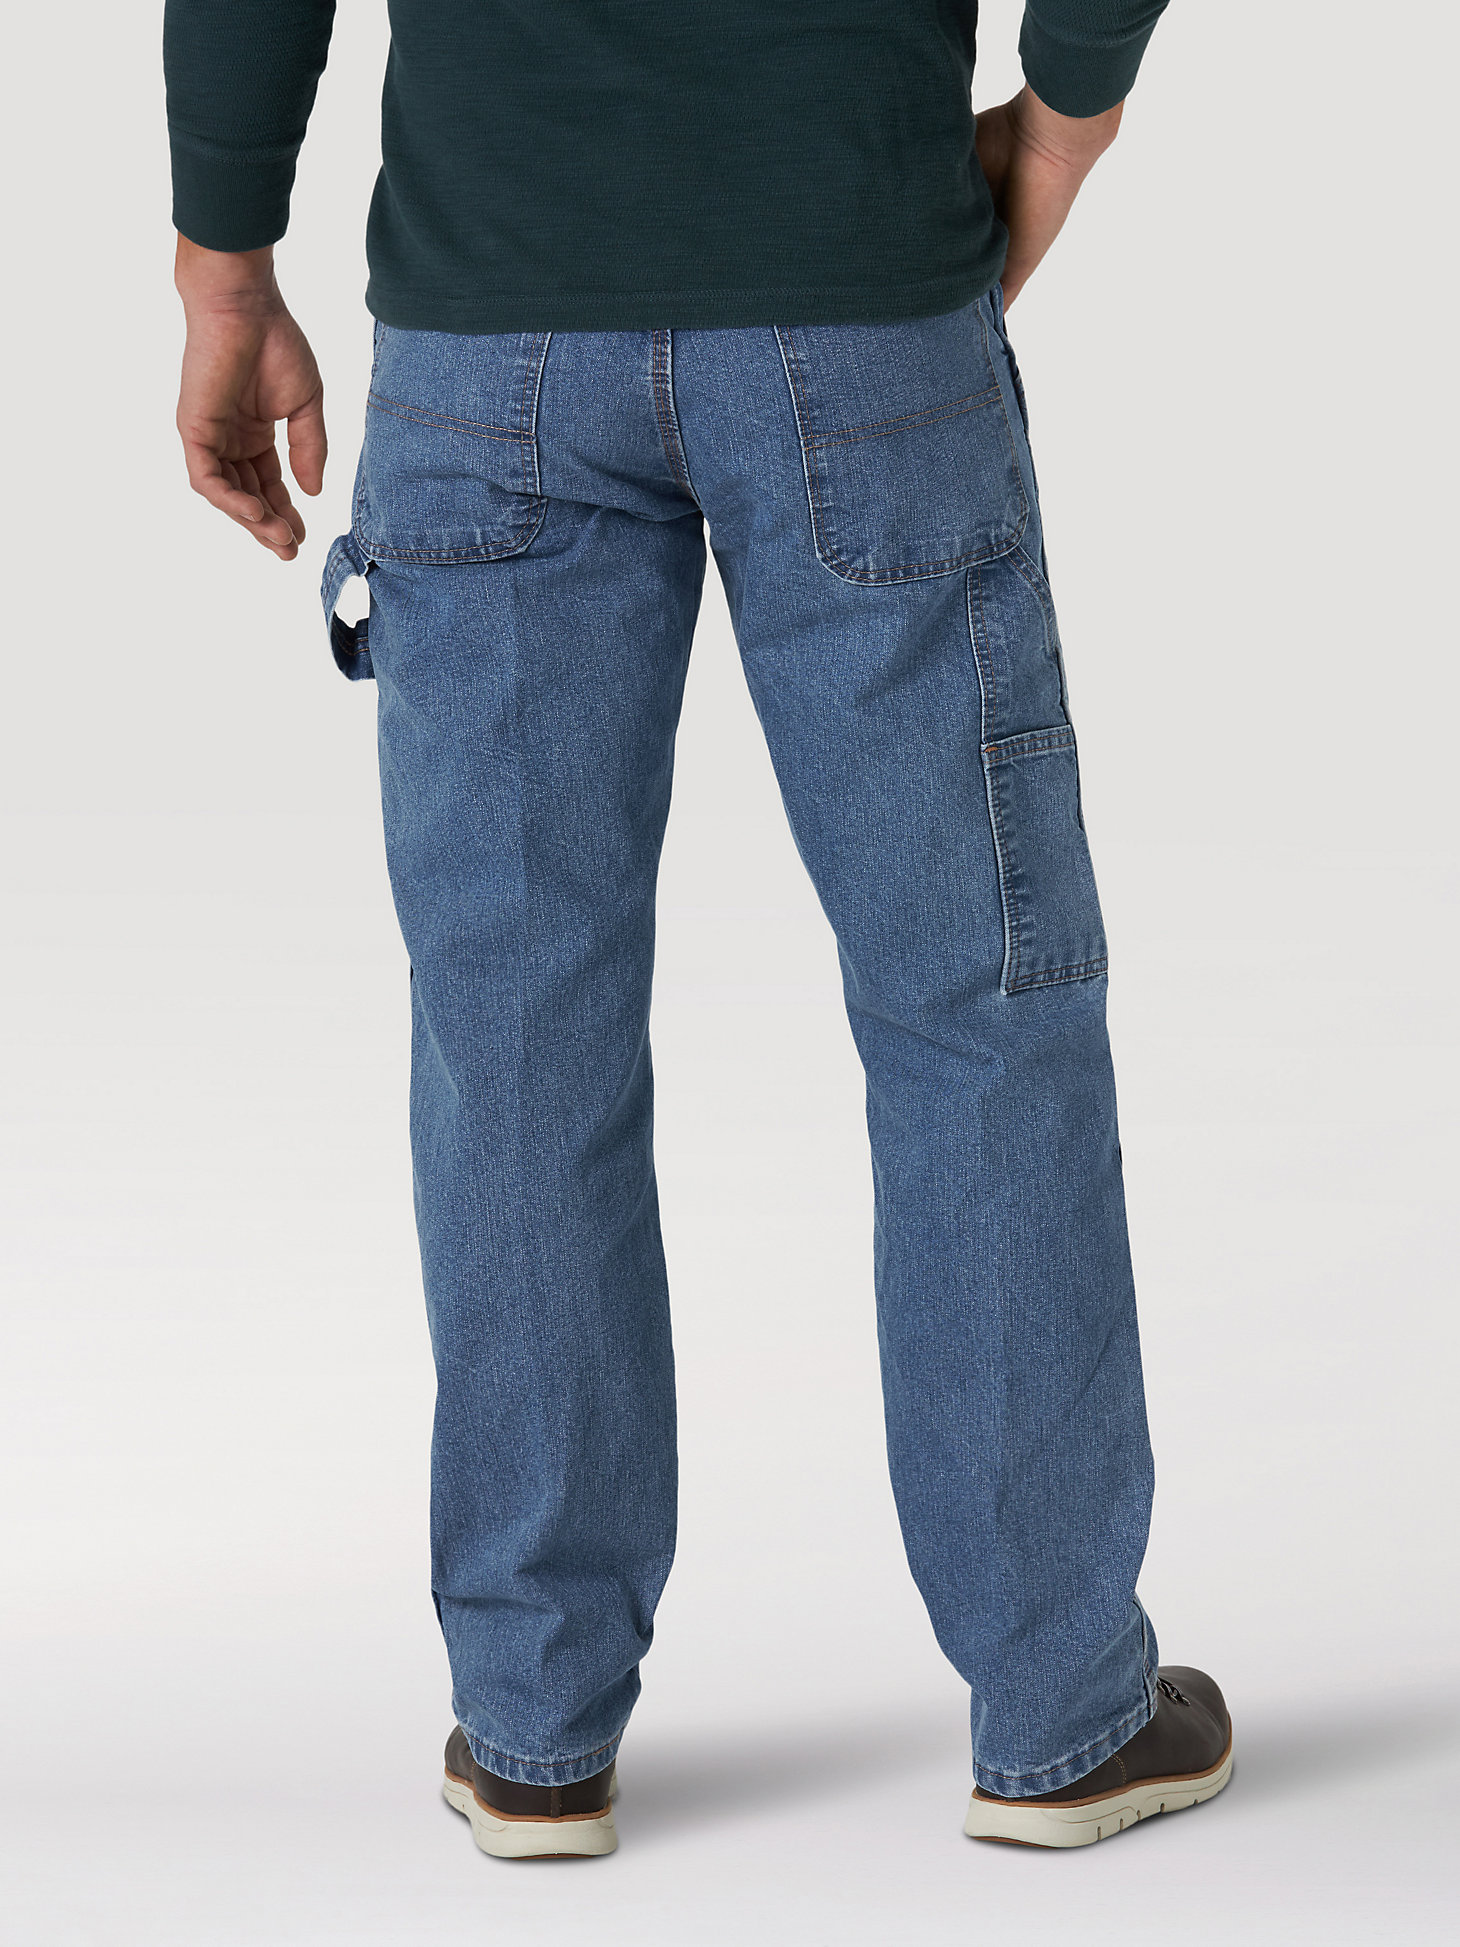 Wrangler® Men's Five Star Premium Carpenter Jean | Men's JEANS | Wrangler®